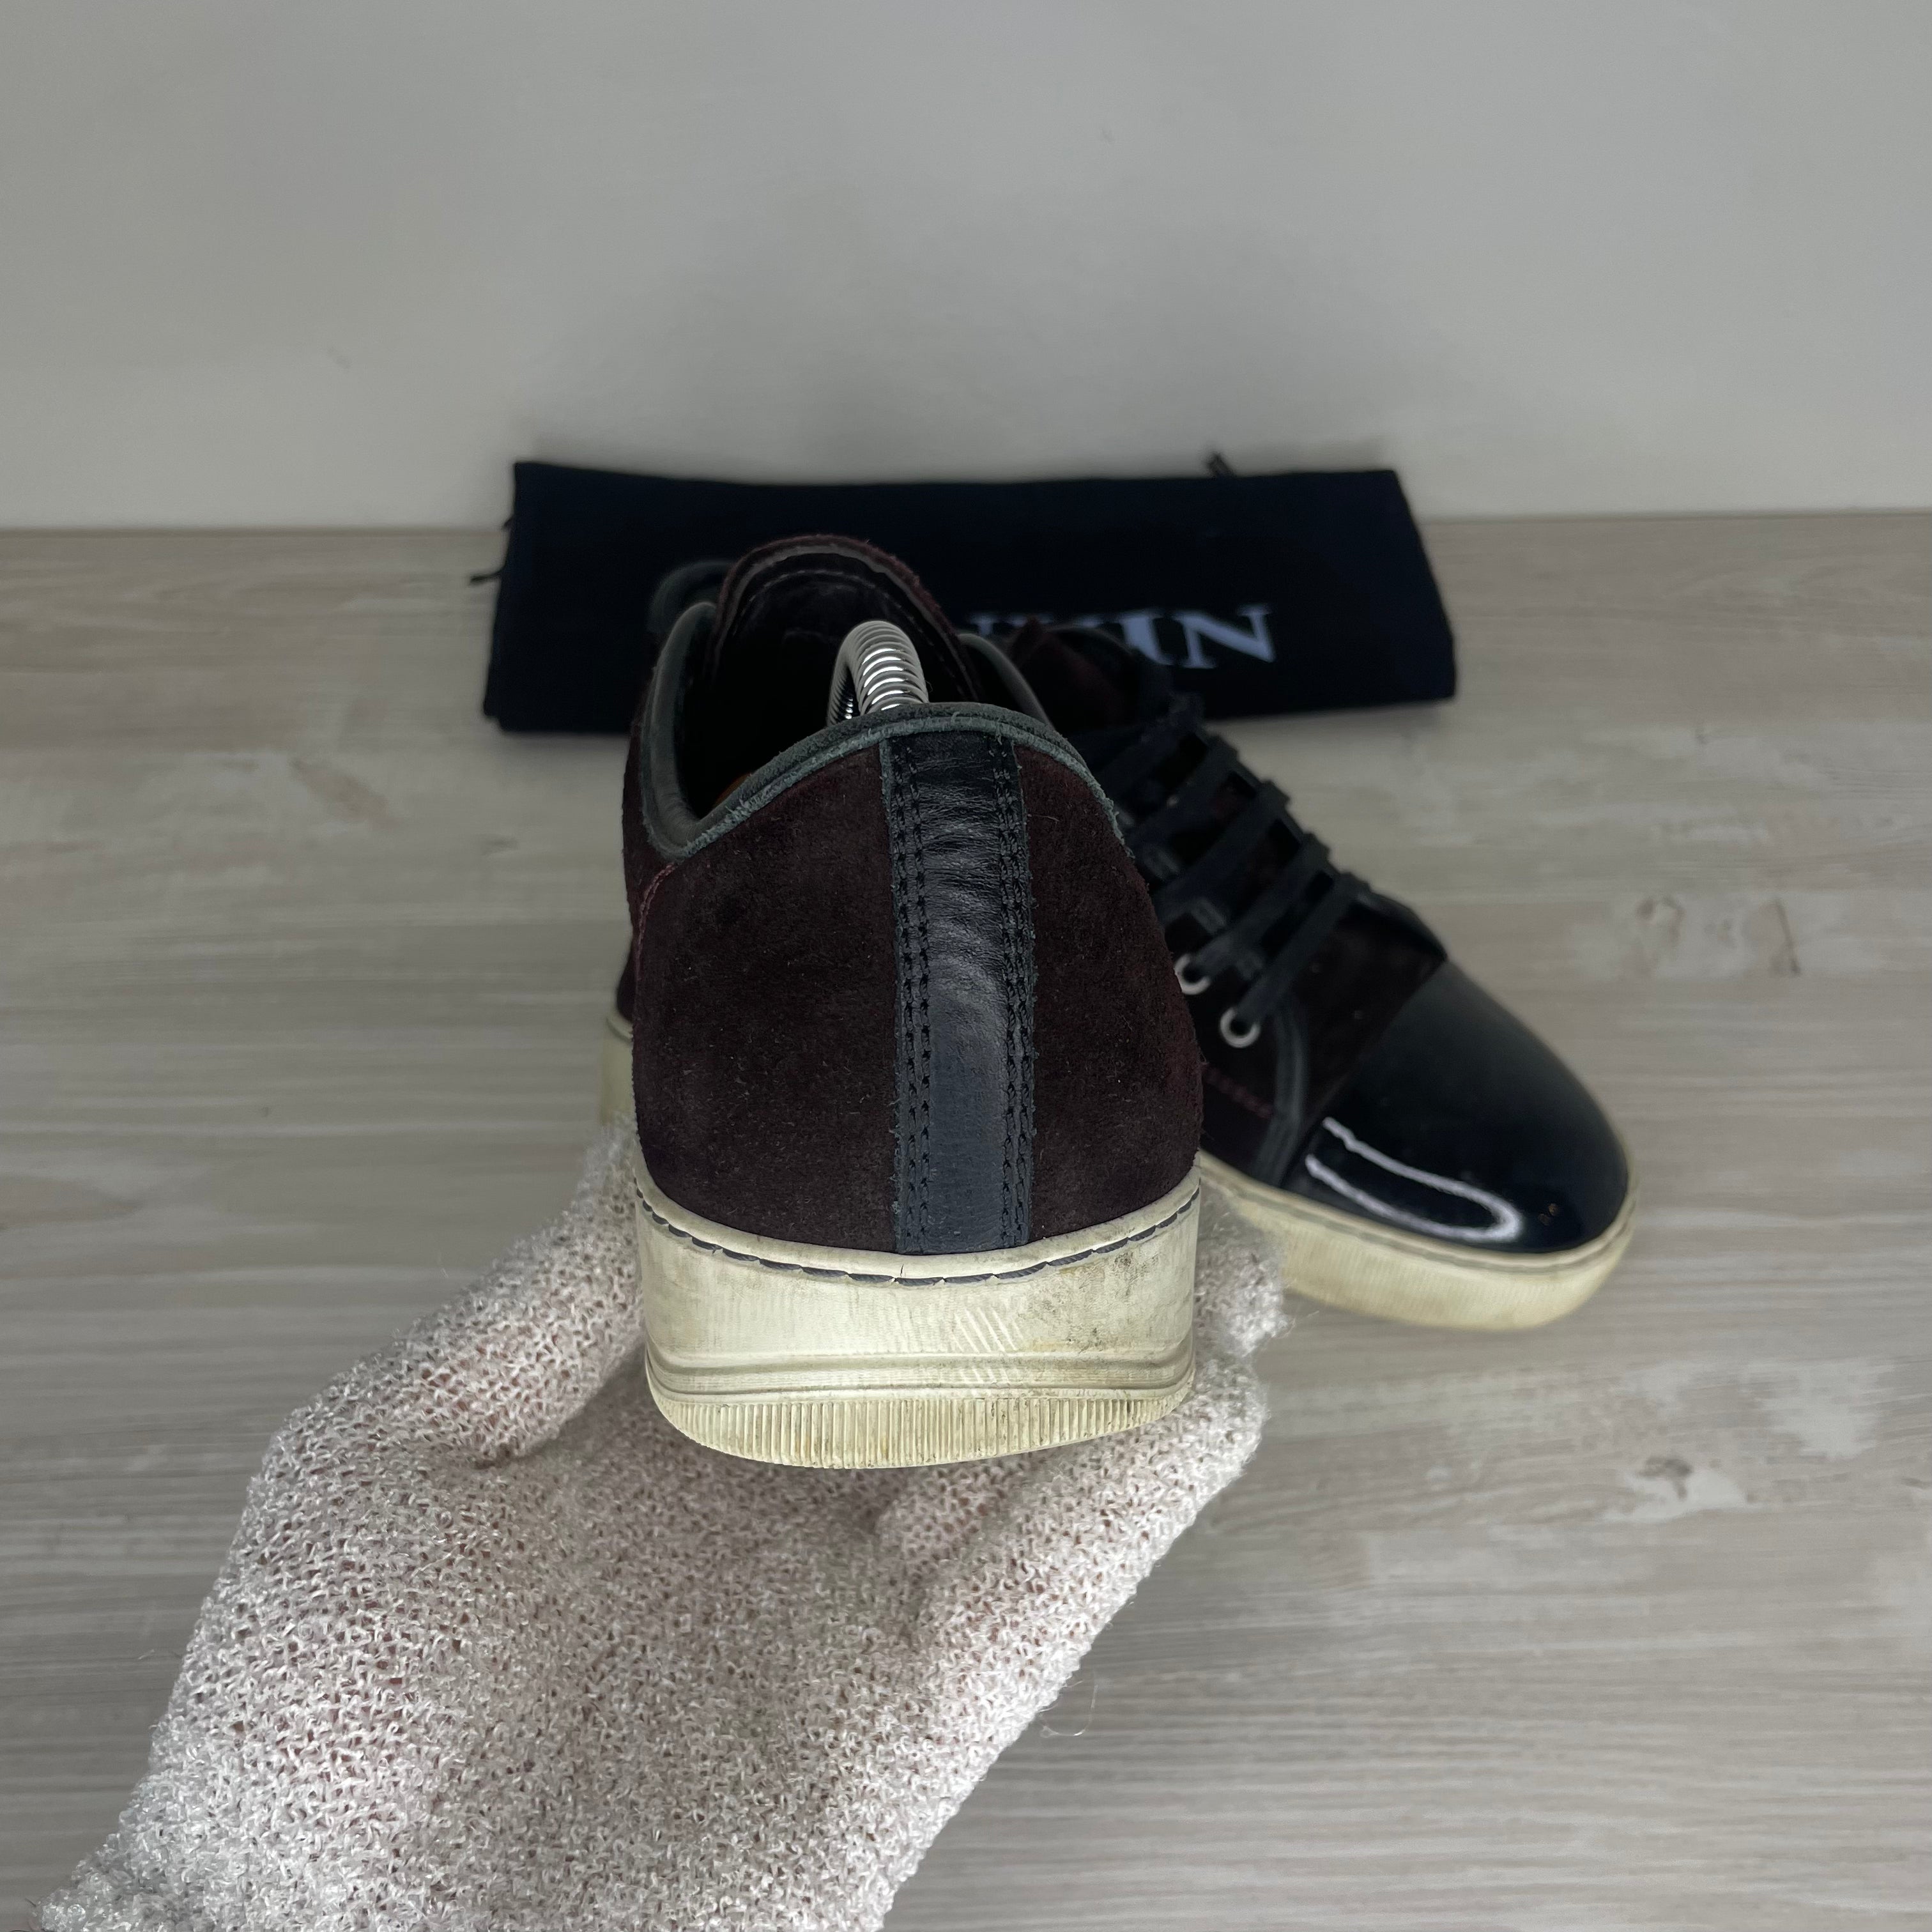 Lanvin Sneakers, 'Bordeaux Ruskind' Lak Toe (39)